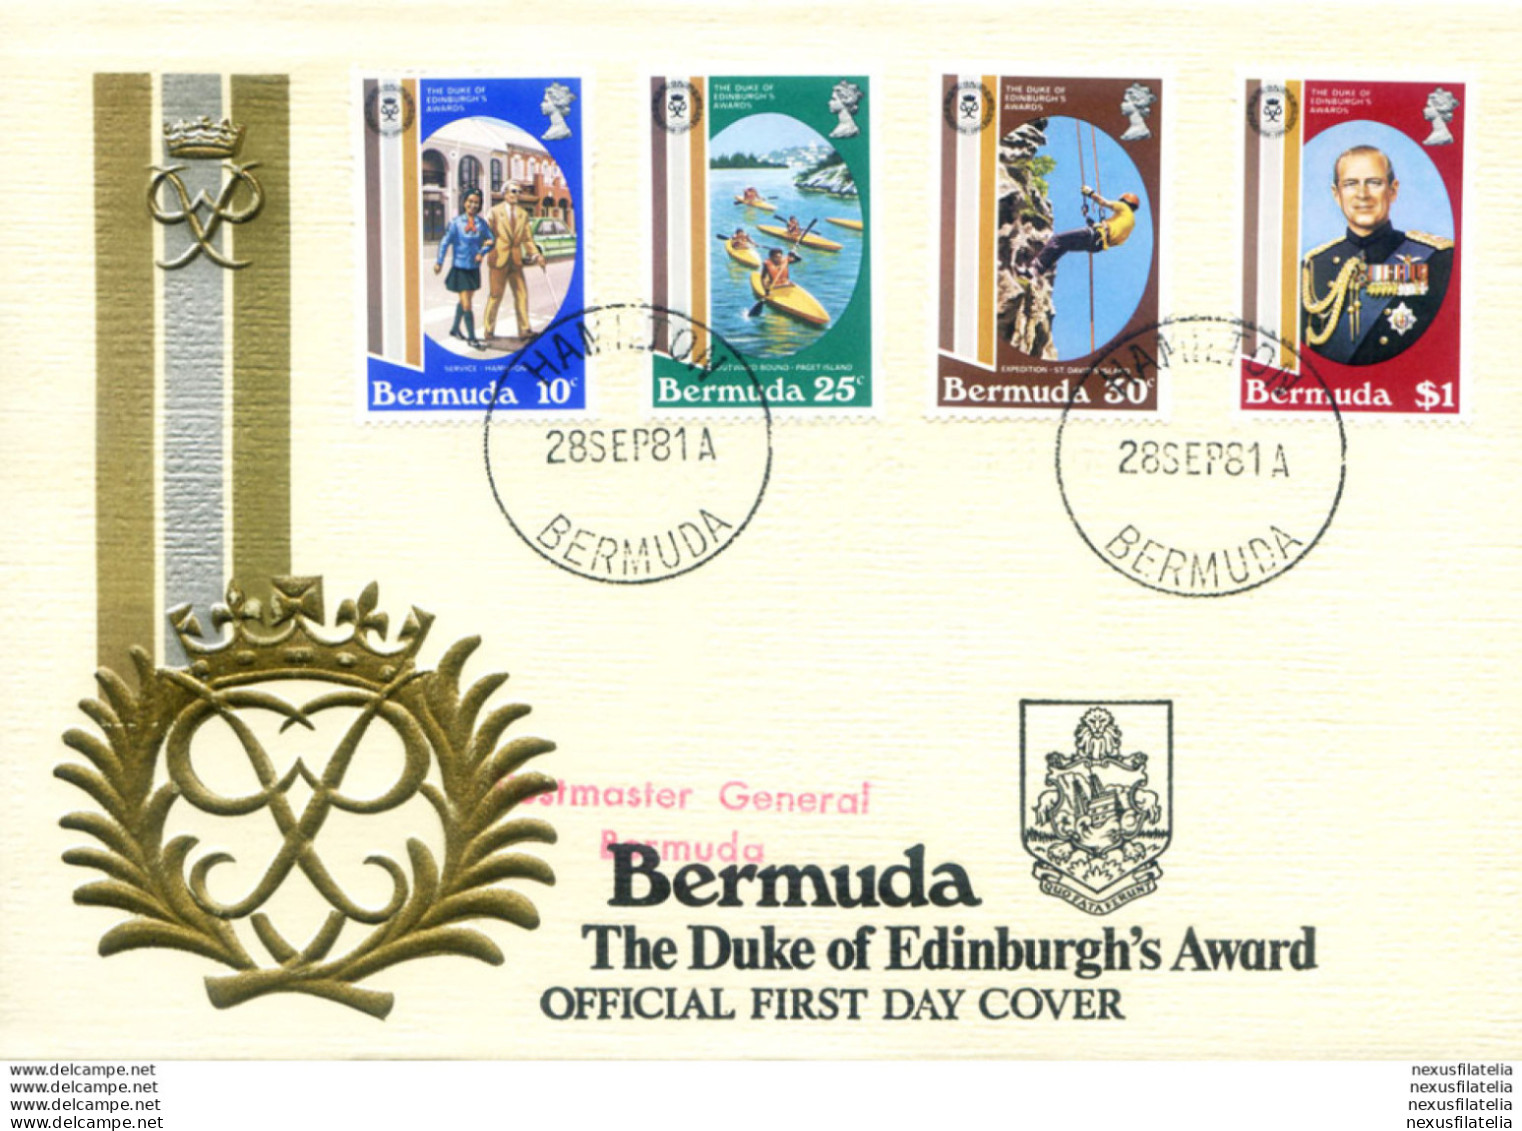 Annata Completa 1981. 3 FDC. - Bermudes